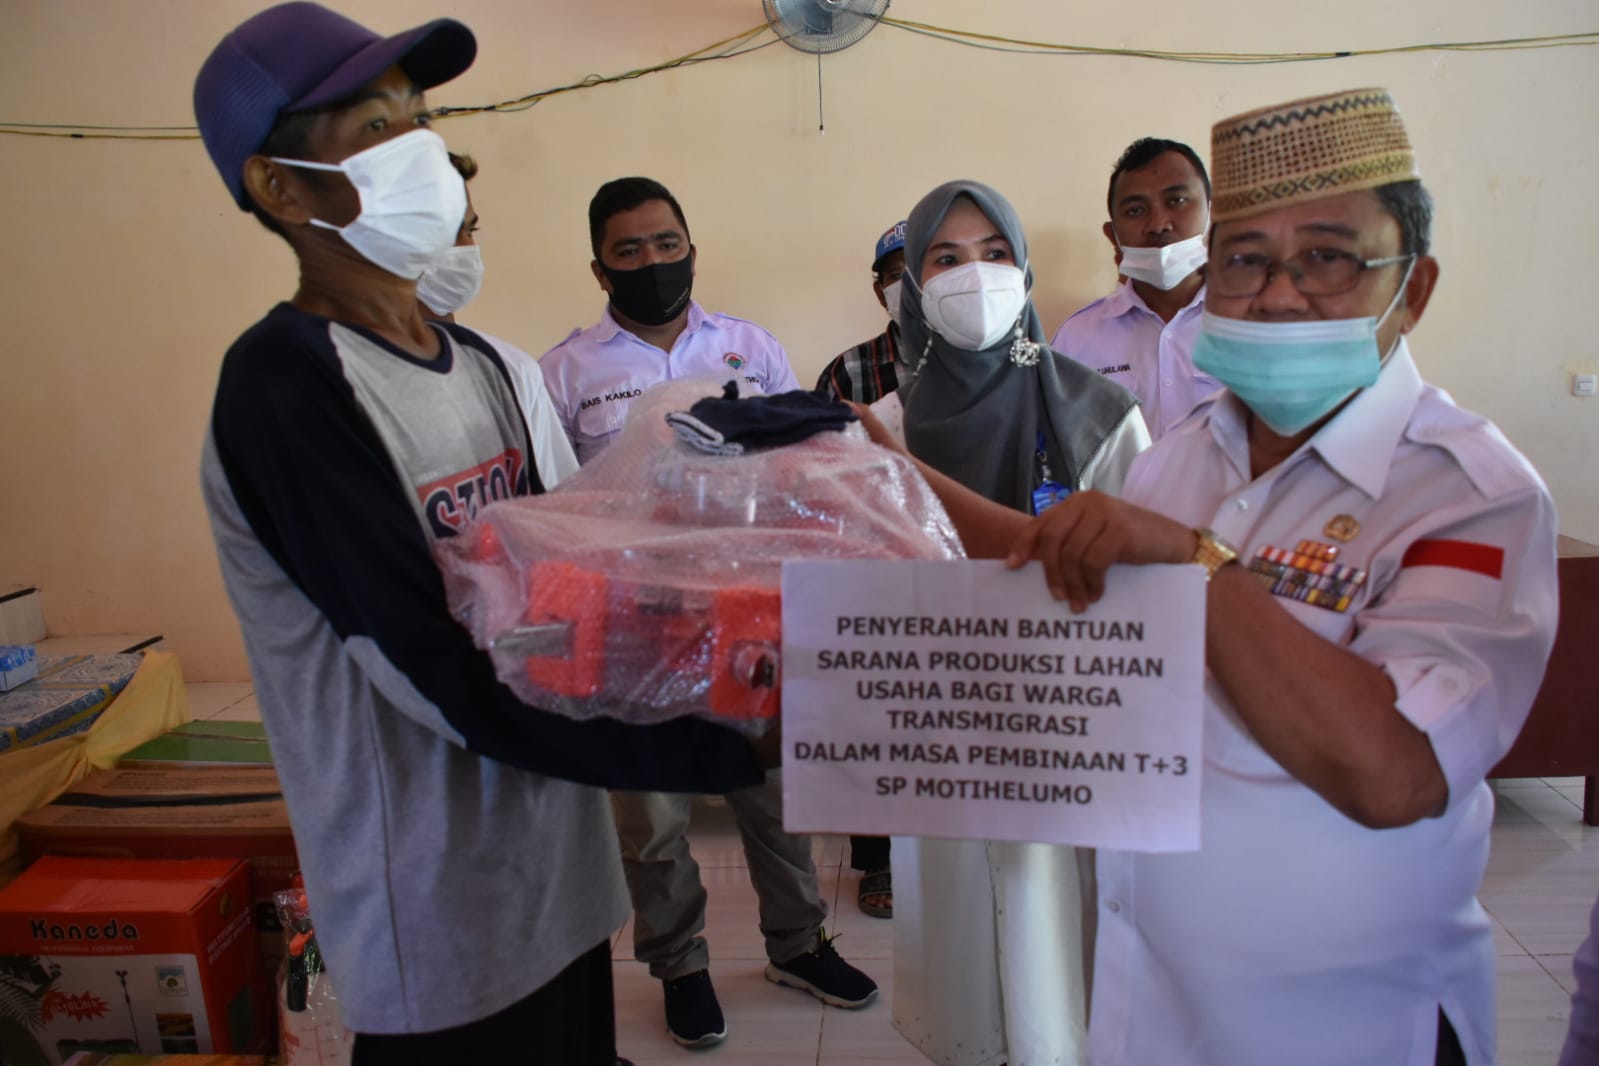 Bupati Gorontalo Utara Serahkan Bantuan Sarana Produksi Lahan Usaha